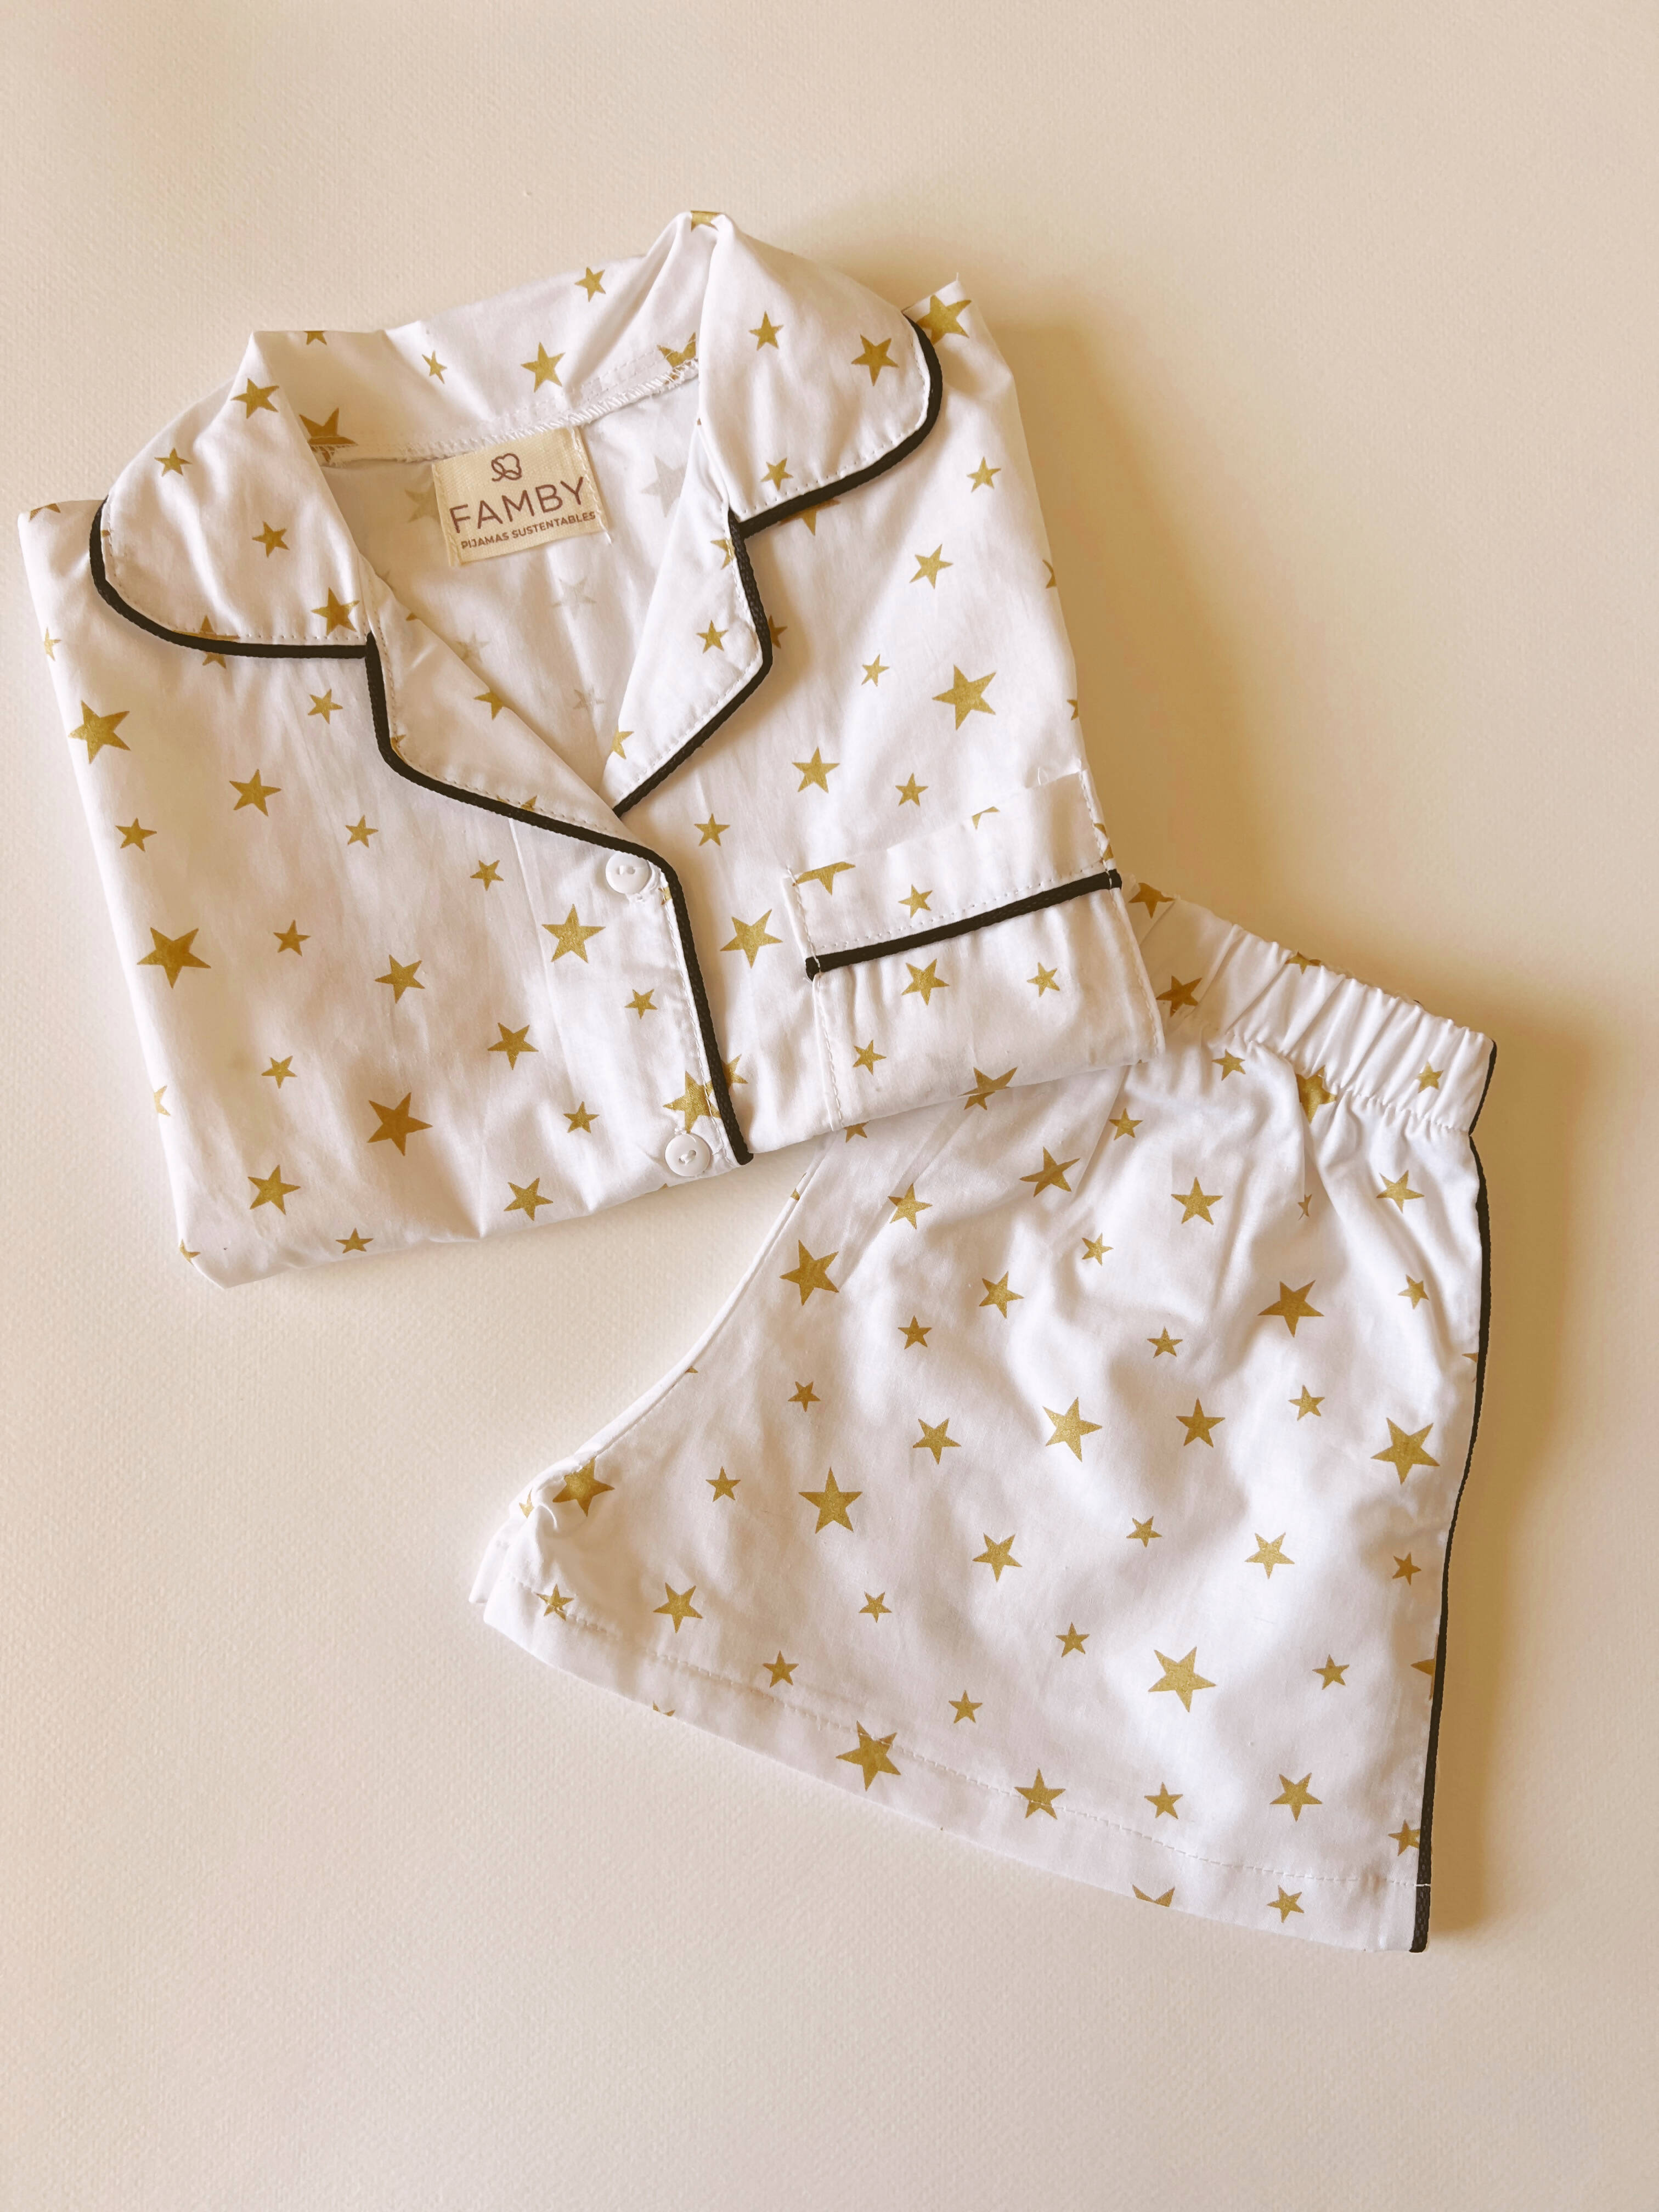 Pijama Infantil estrellas doradas